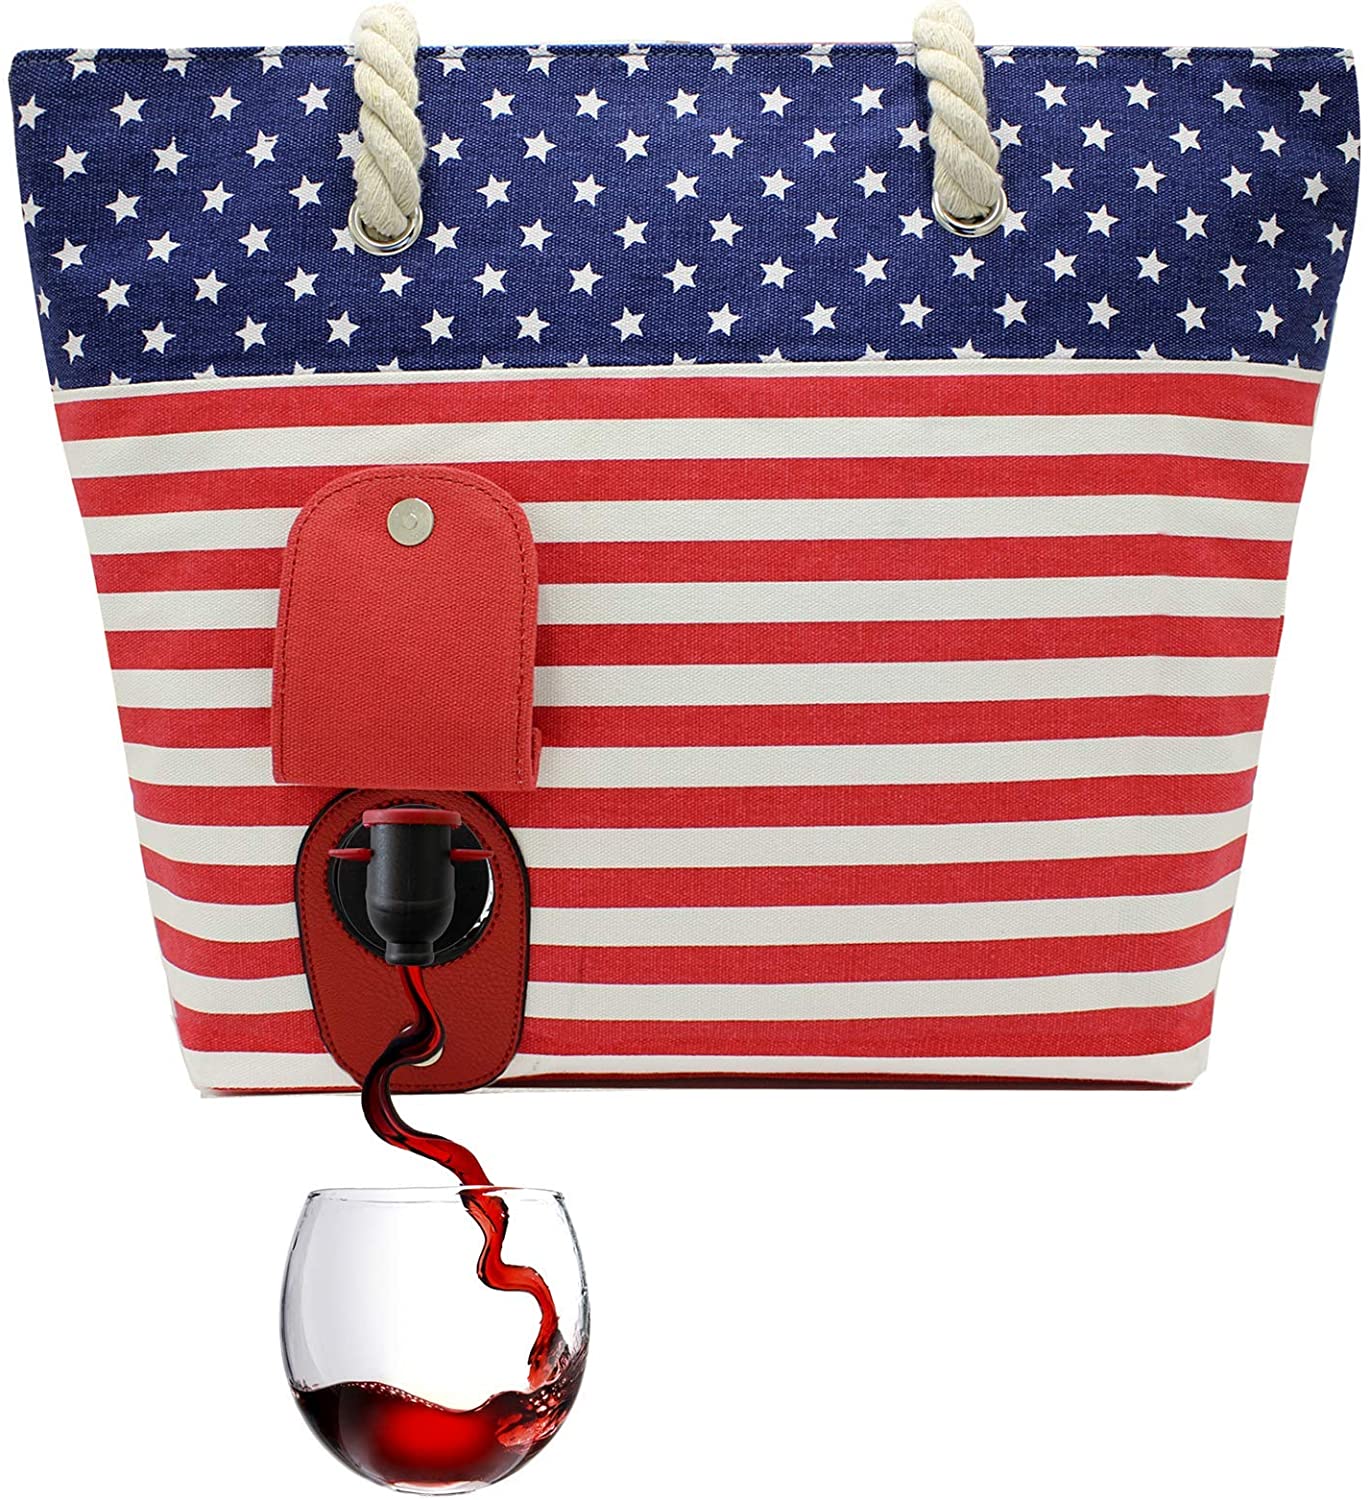 PortoVino wine tote in American flag pattern